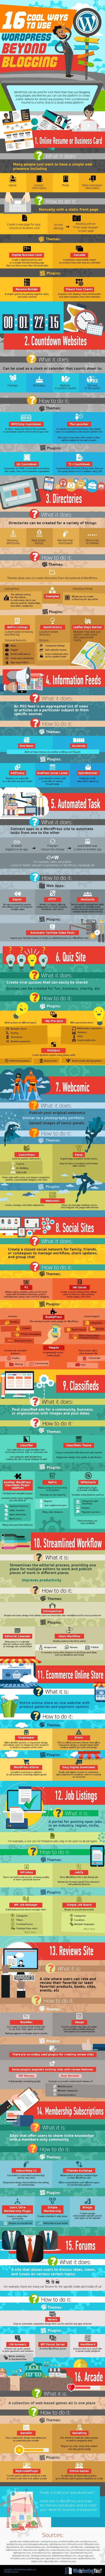 16 Cool Ways to Use WordPress Beyond Blogging - infographic